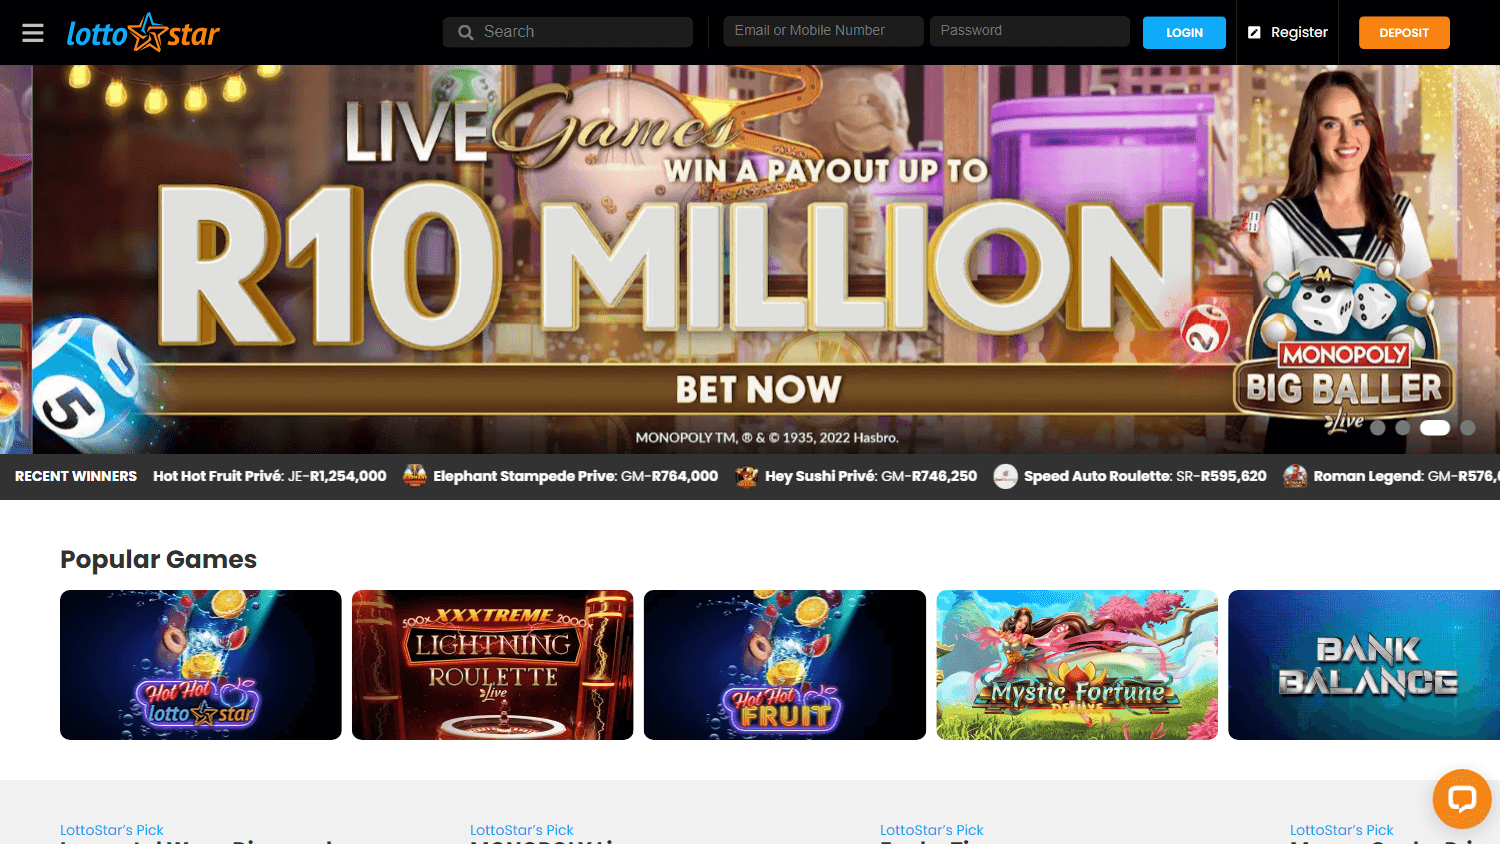 lottostar_casino_homepage_desktop